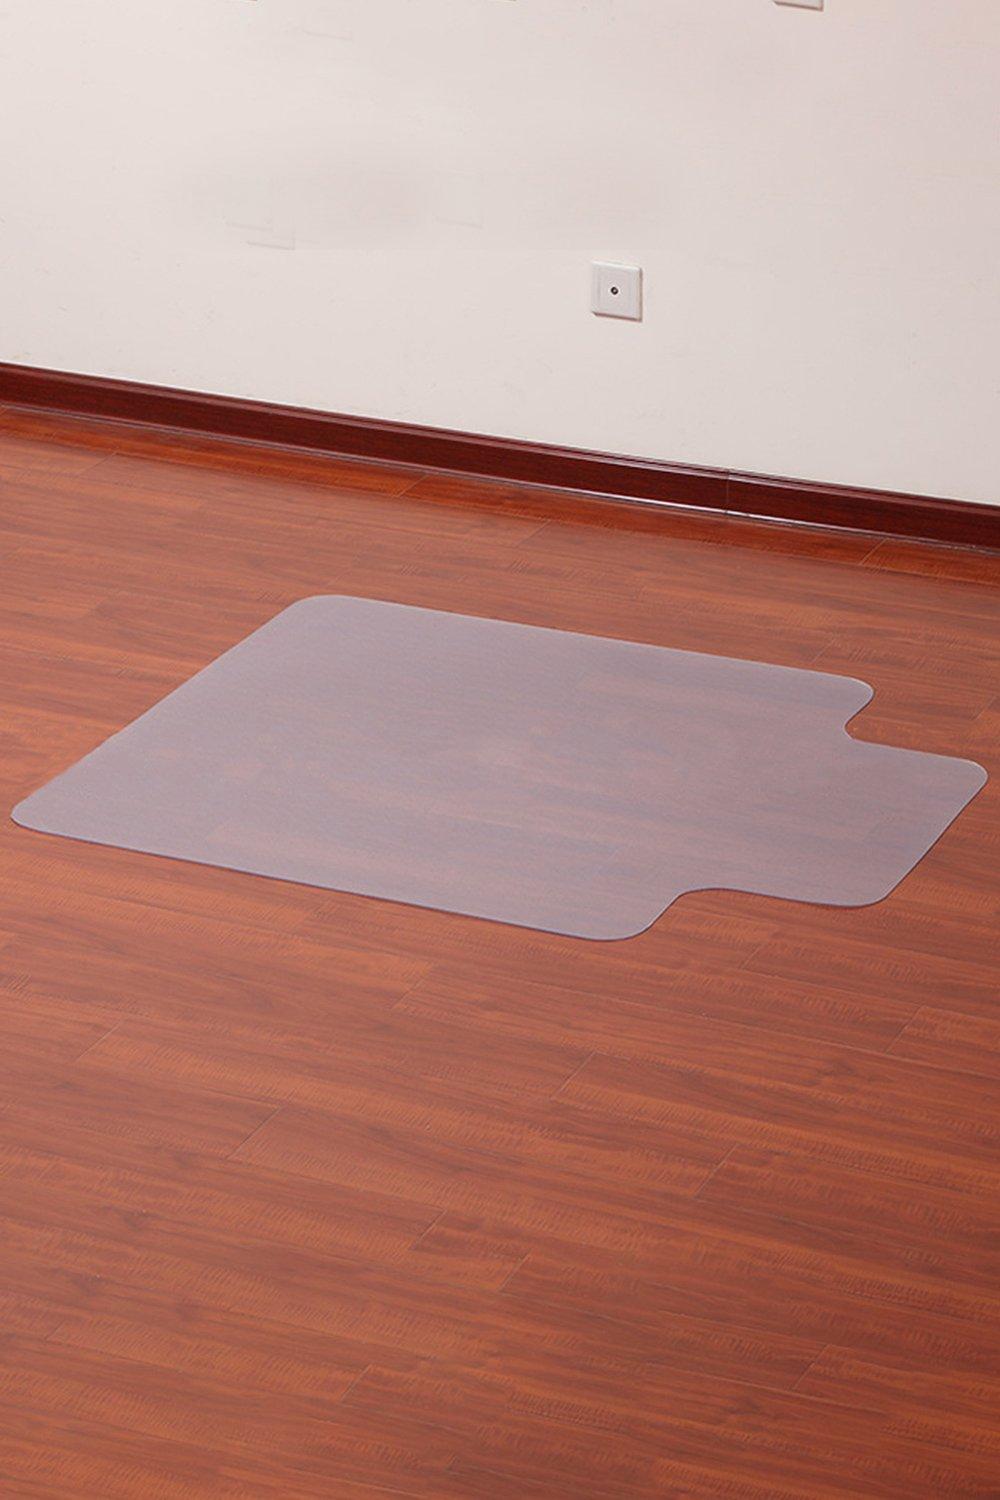 PVC Plastic Clear Non-Slip Office Chair Desk Mat Floor Carpet Floor Protector 120x75cm